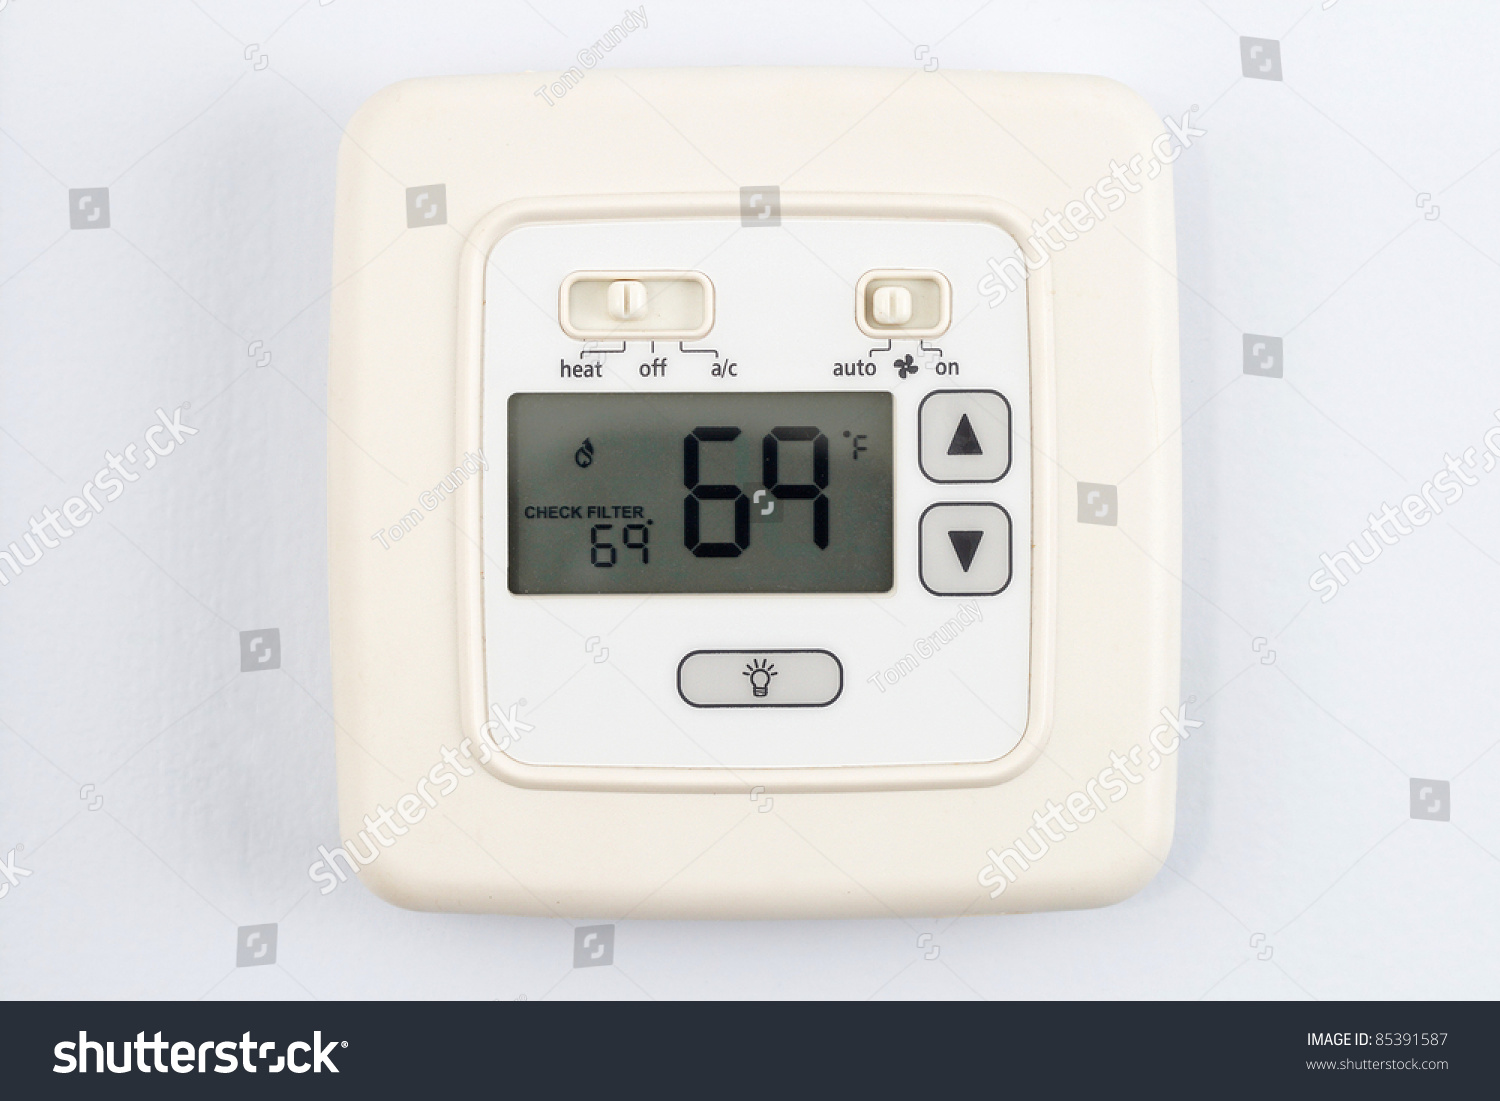 Digital Thermostat On Light Blue Wall Stock Photo 85391587 - Shutterstock